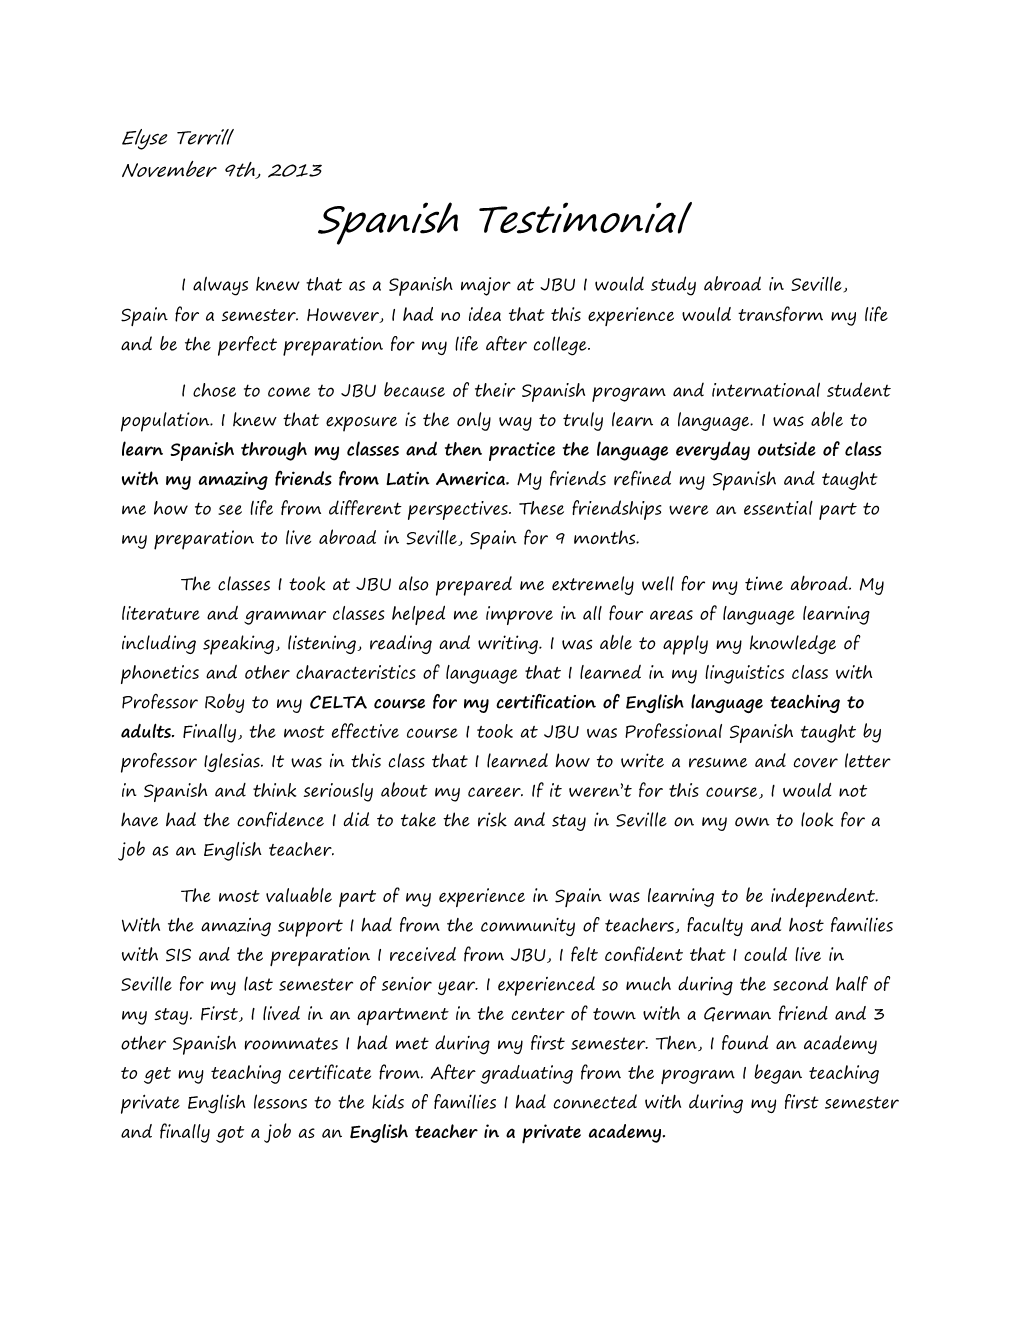 Spanish Testimonial